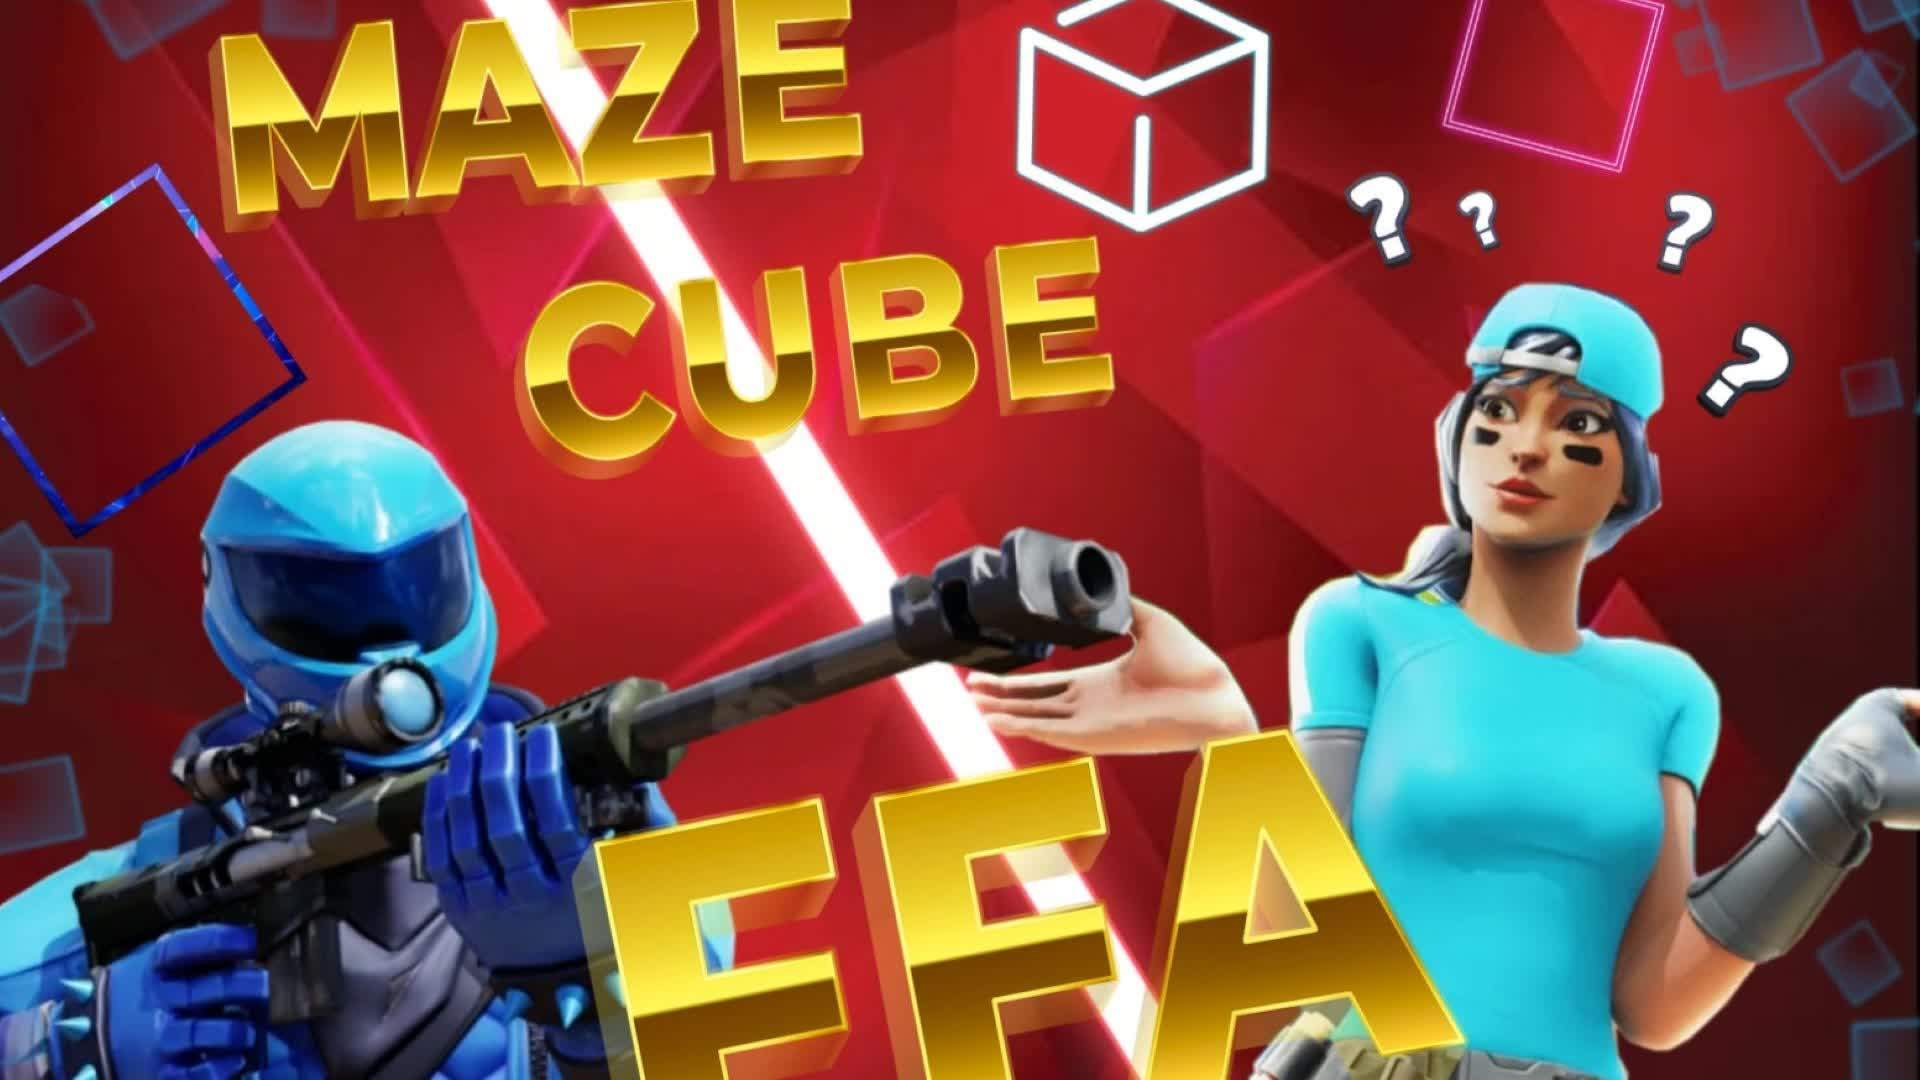 The cube FFA